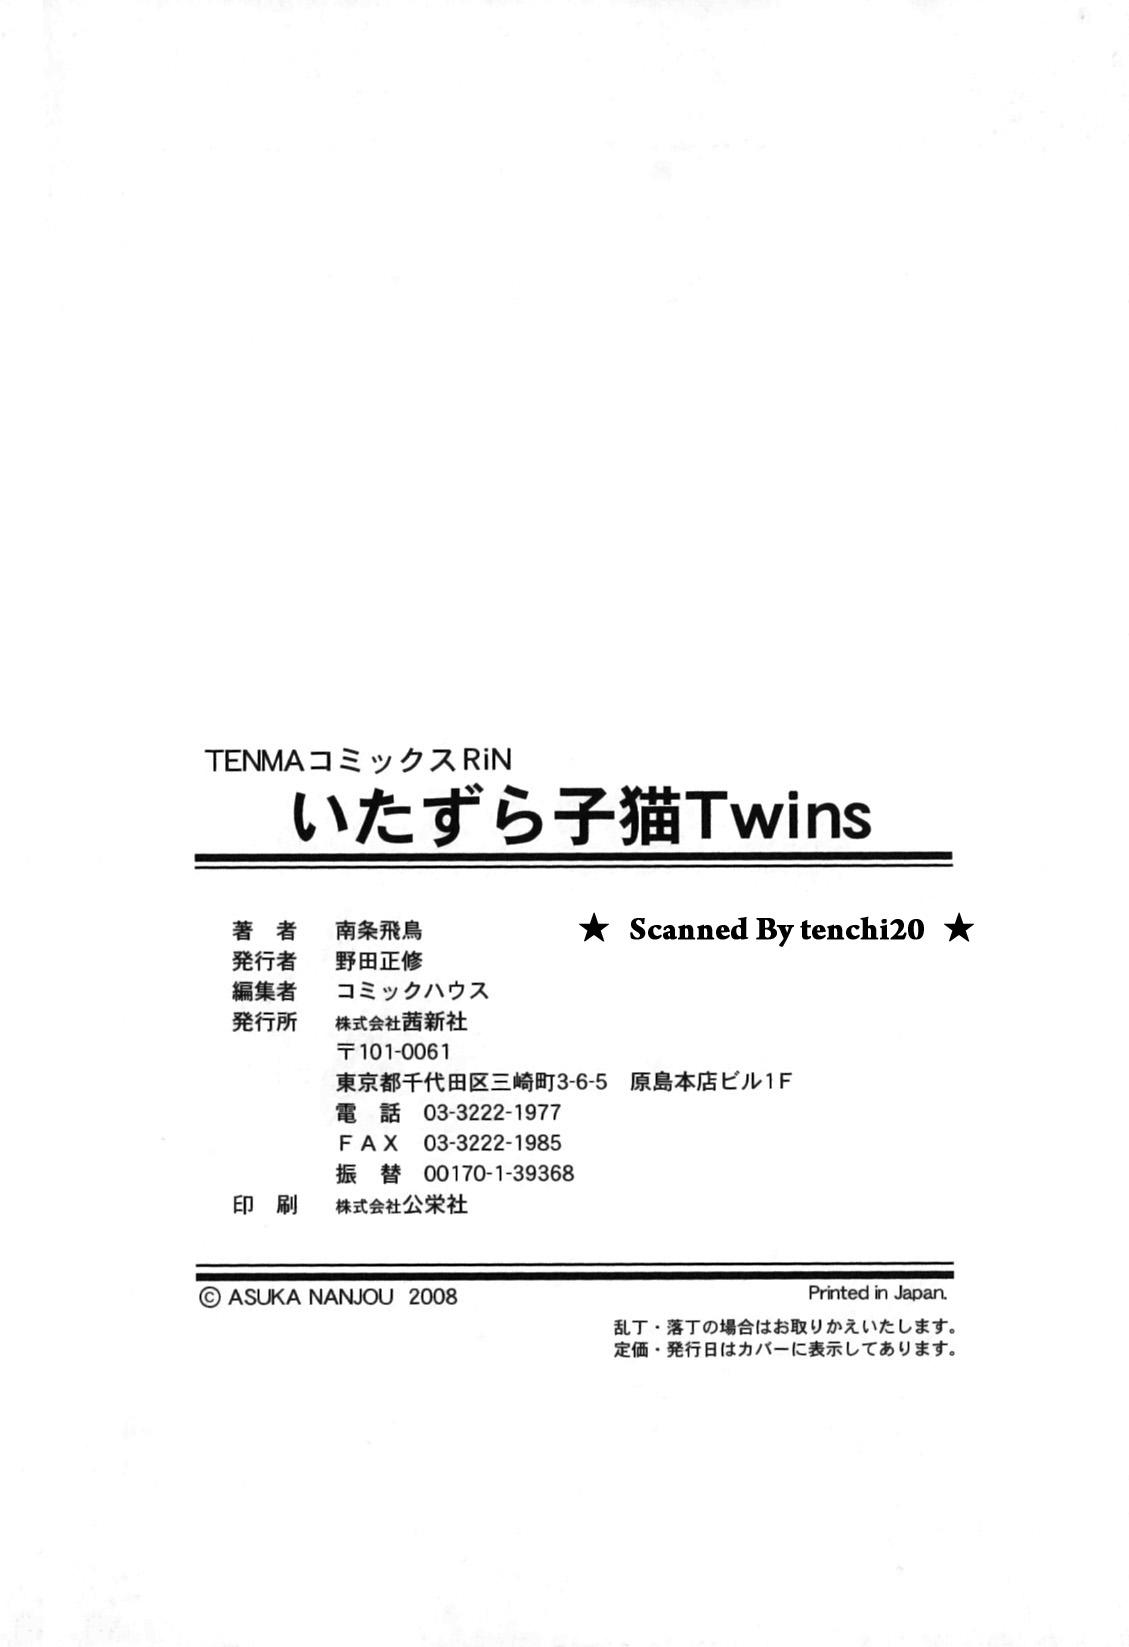 Itazura Koneko Twins 189